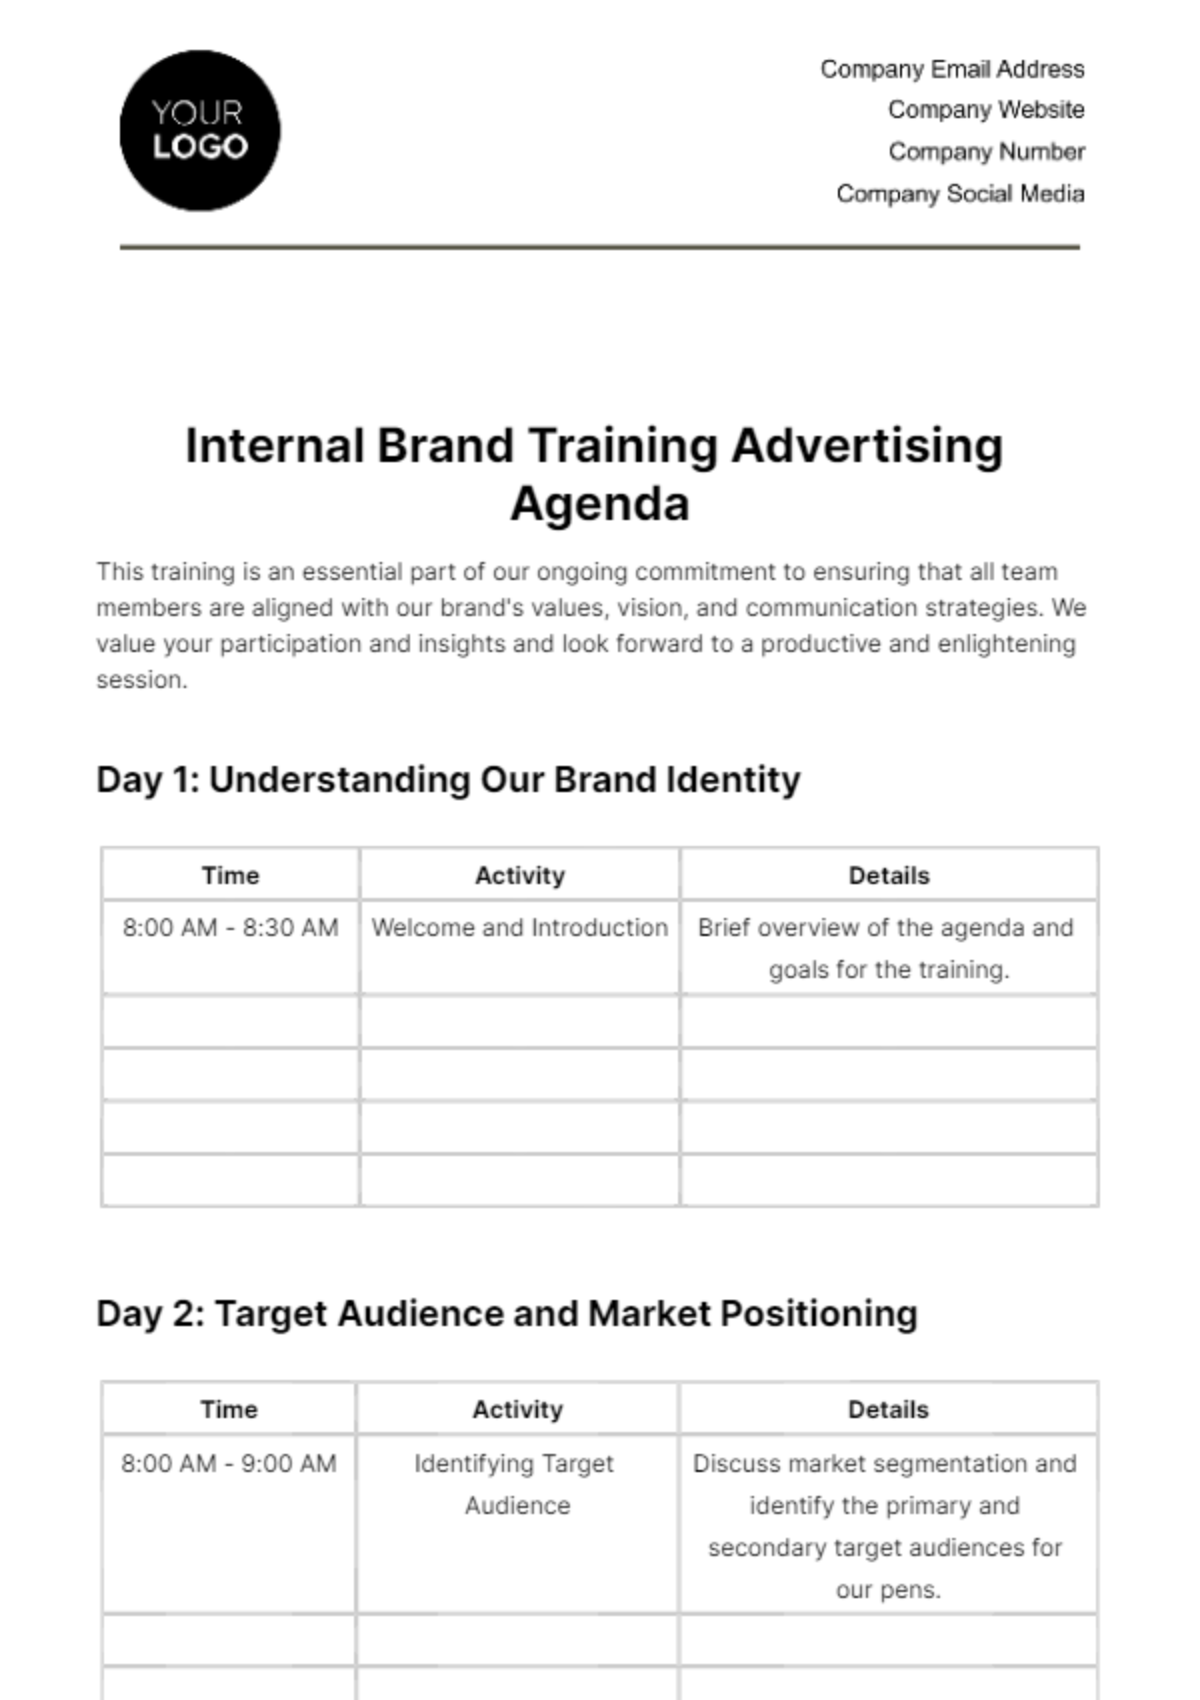 Internal Brand Training Advertising Agenda Template